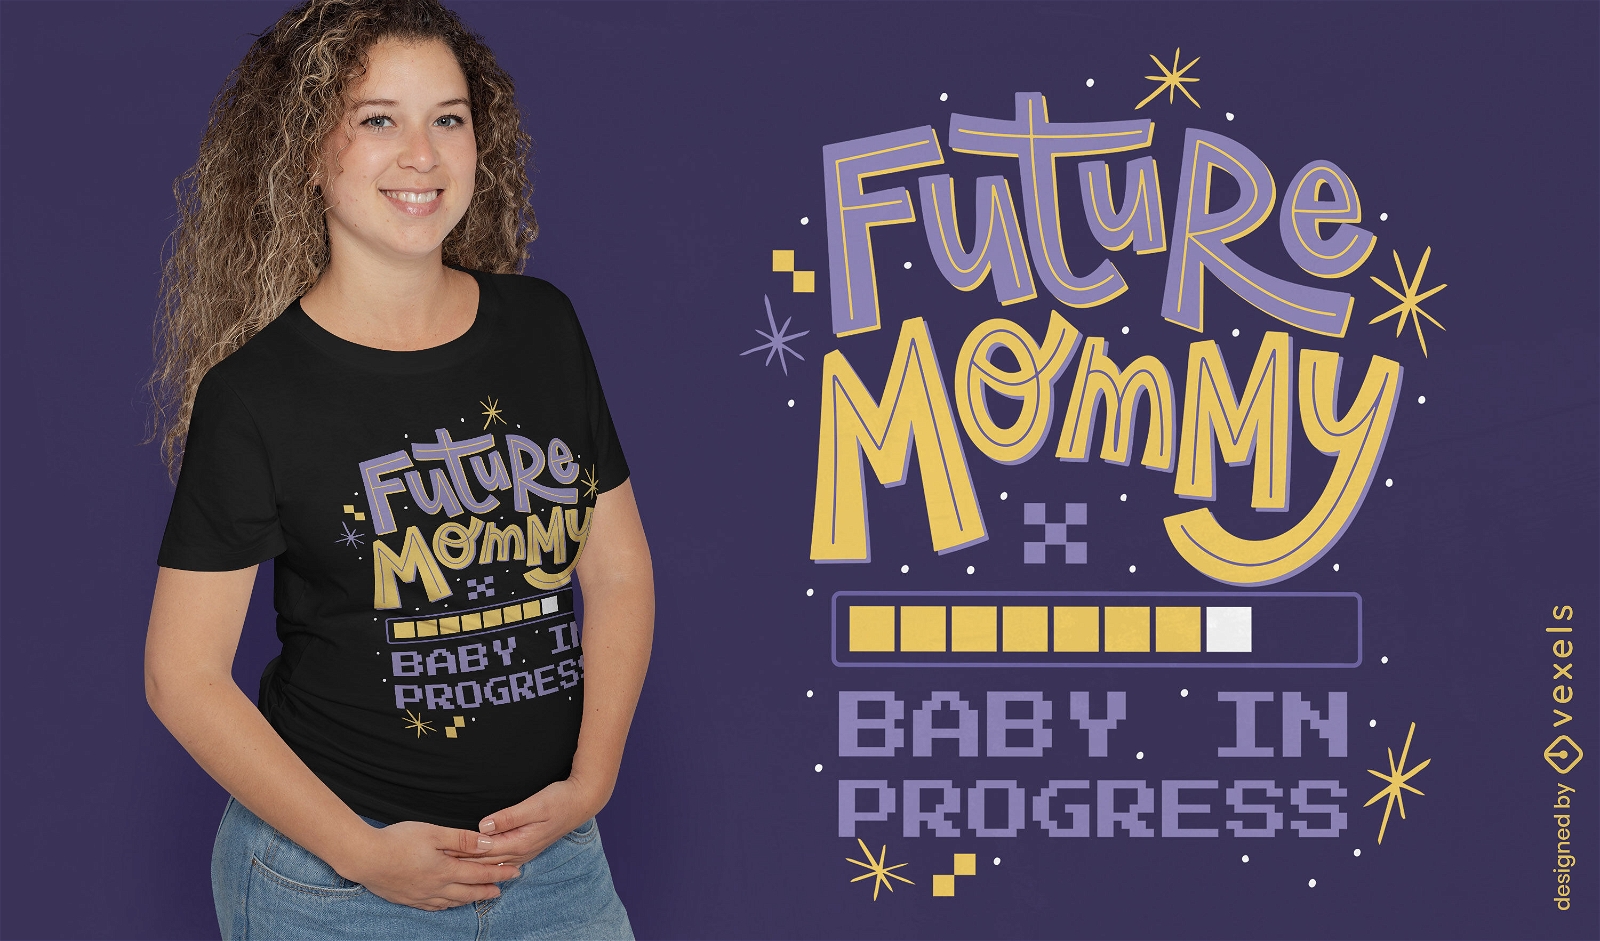 Future mommy t-shirt design